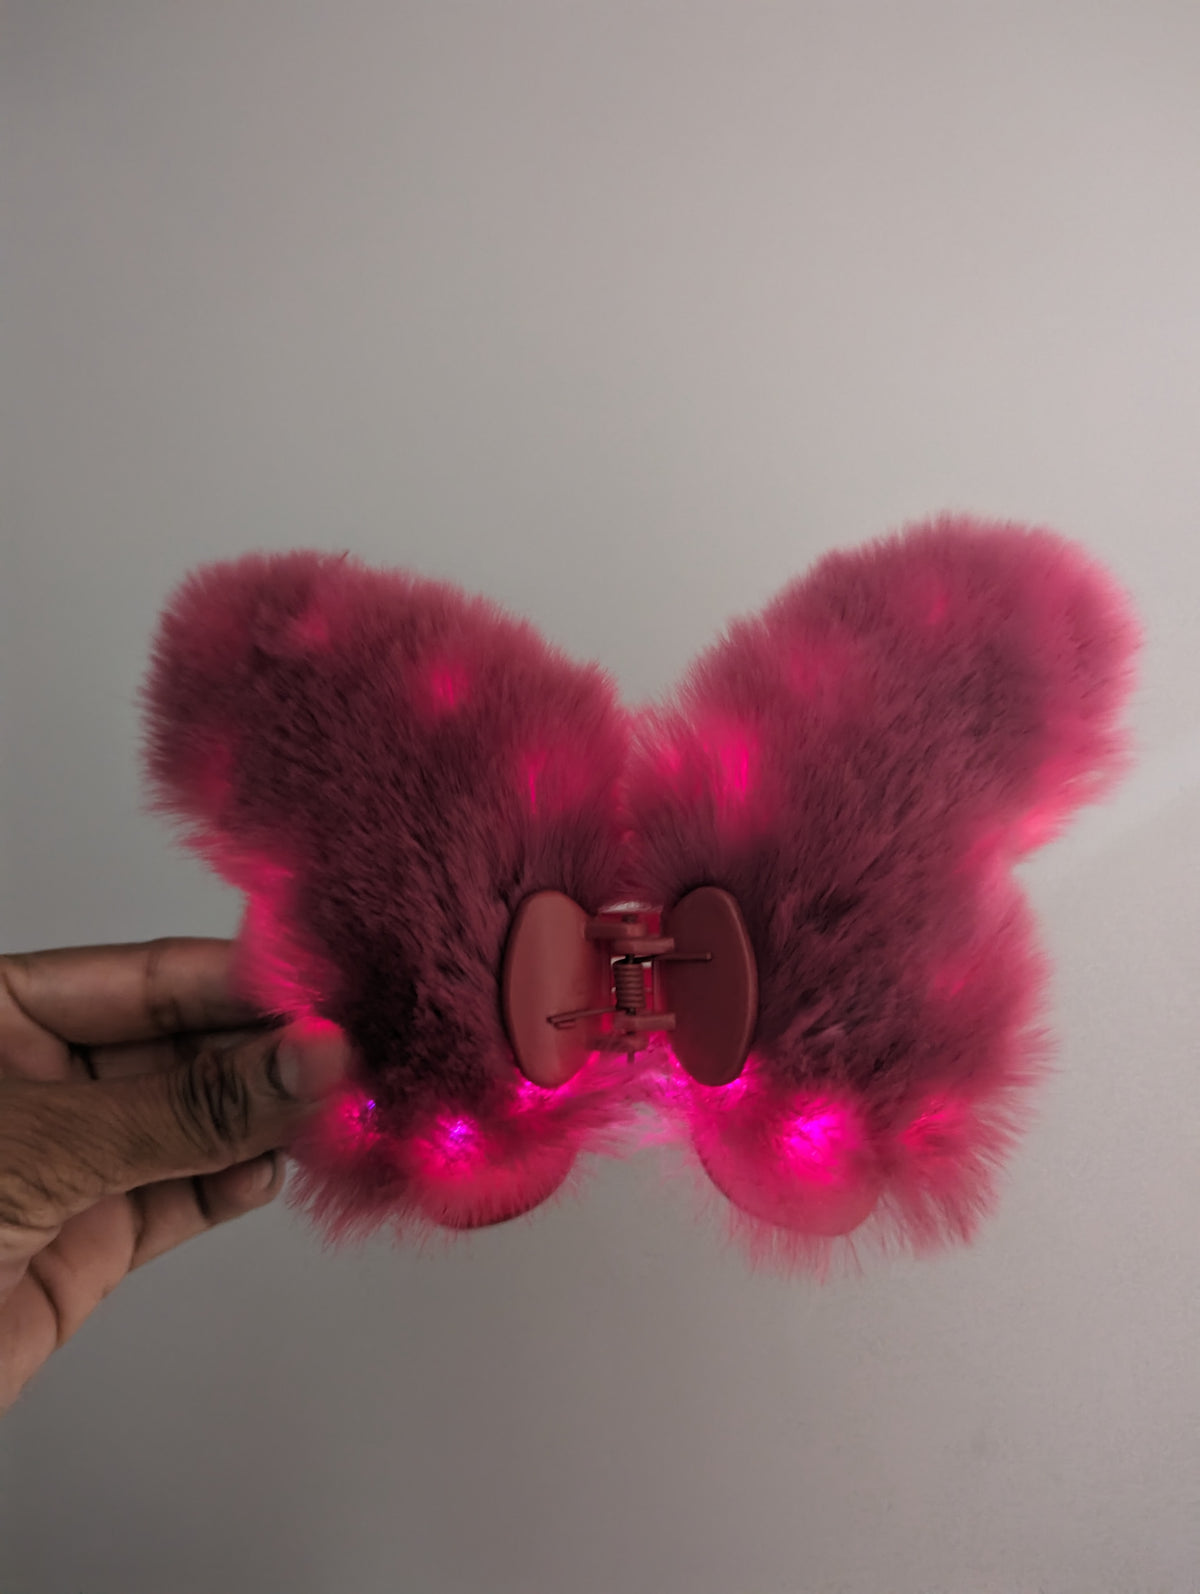 SAMPLE SALE - Light Up Fuzzy Butterfly Hair Clip - FINAL SALE